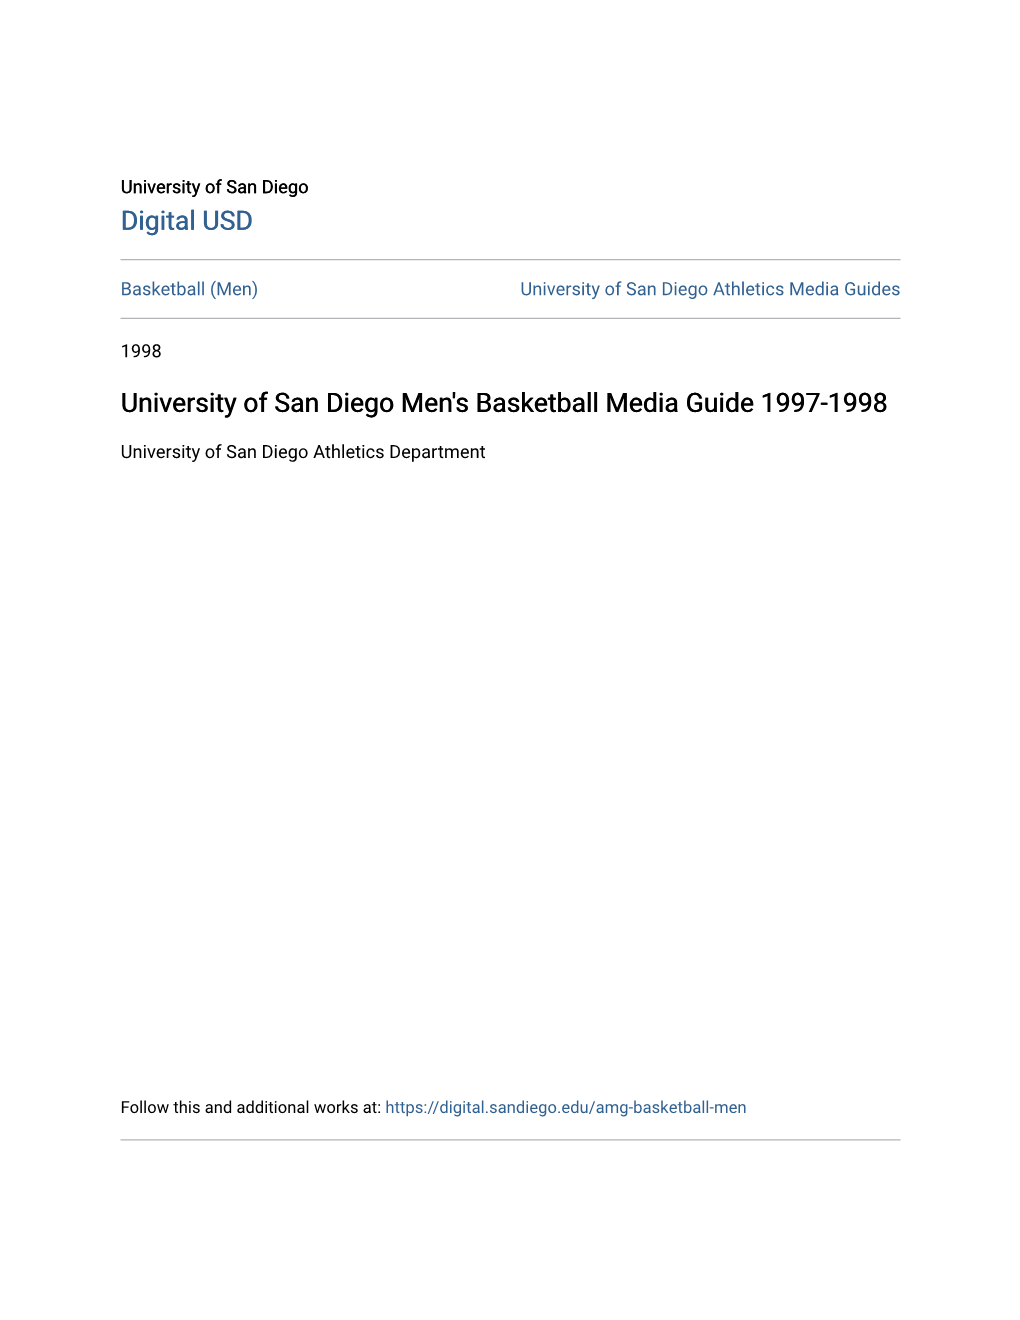 University of San Diego Men's Basketball Media Guide 1997-1998